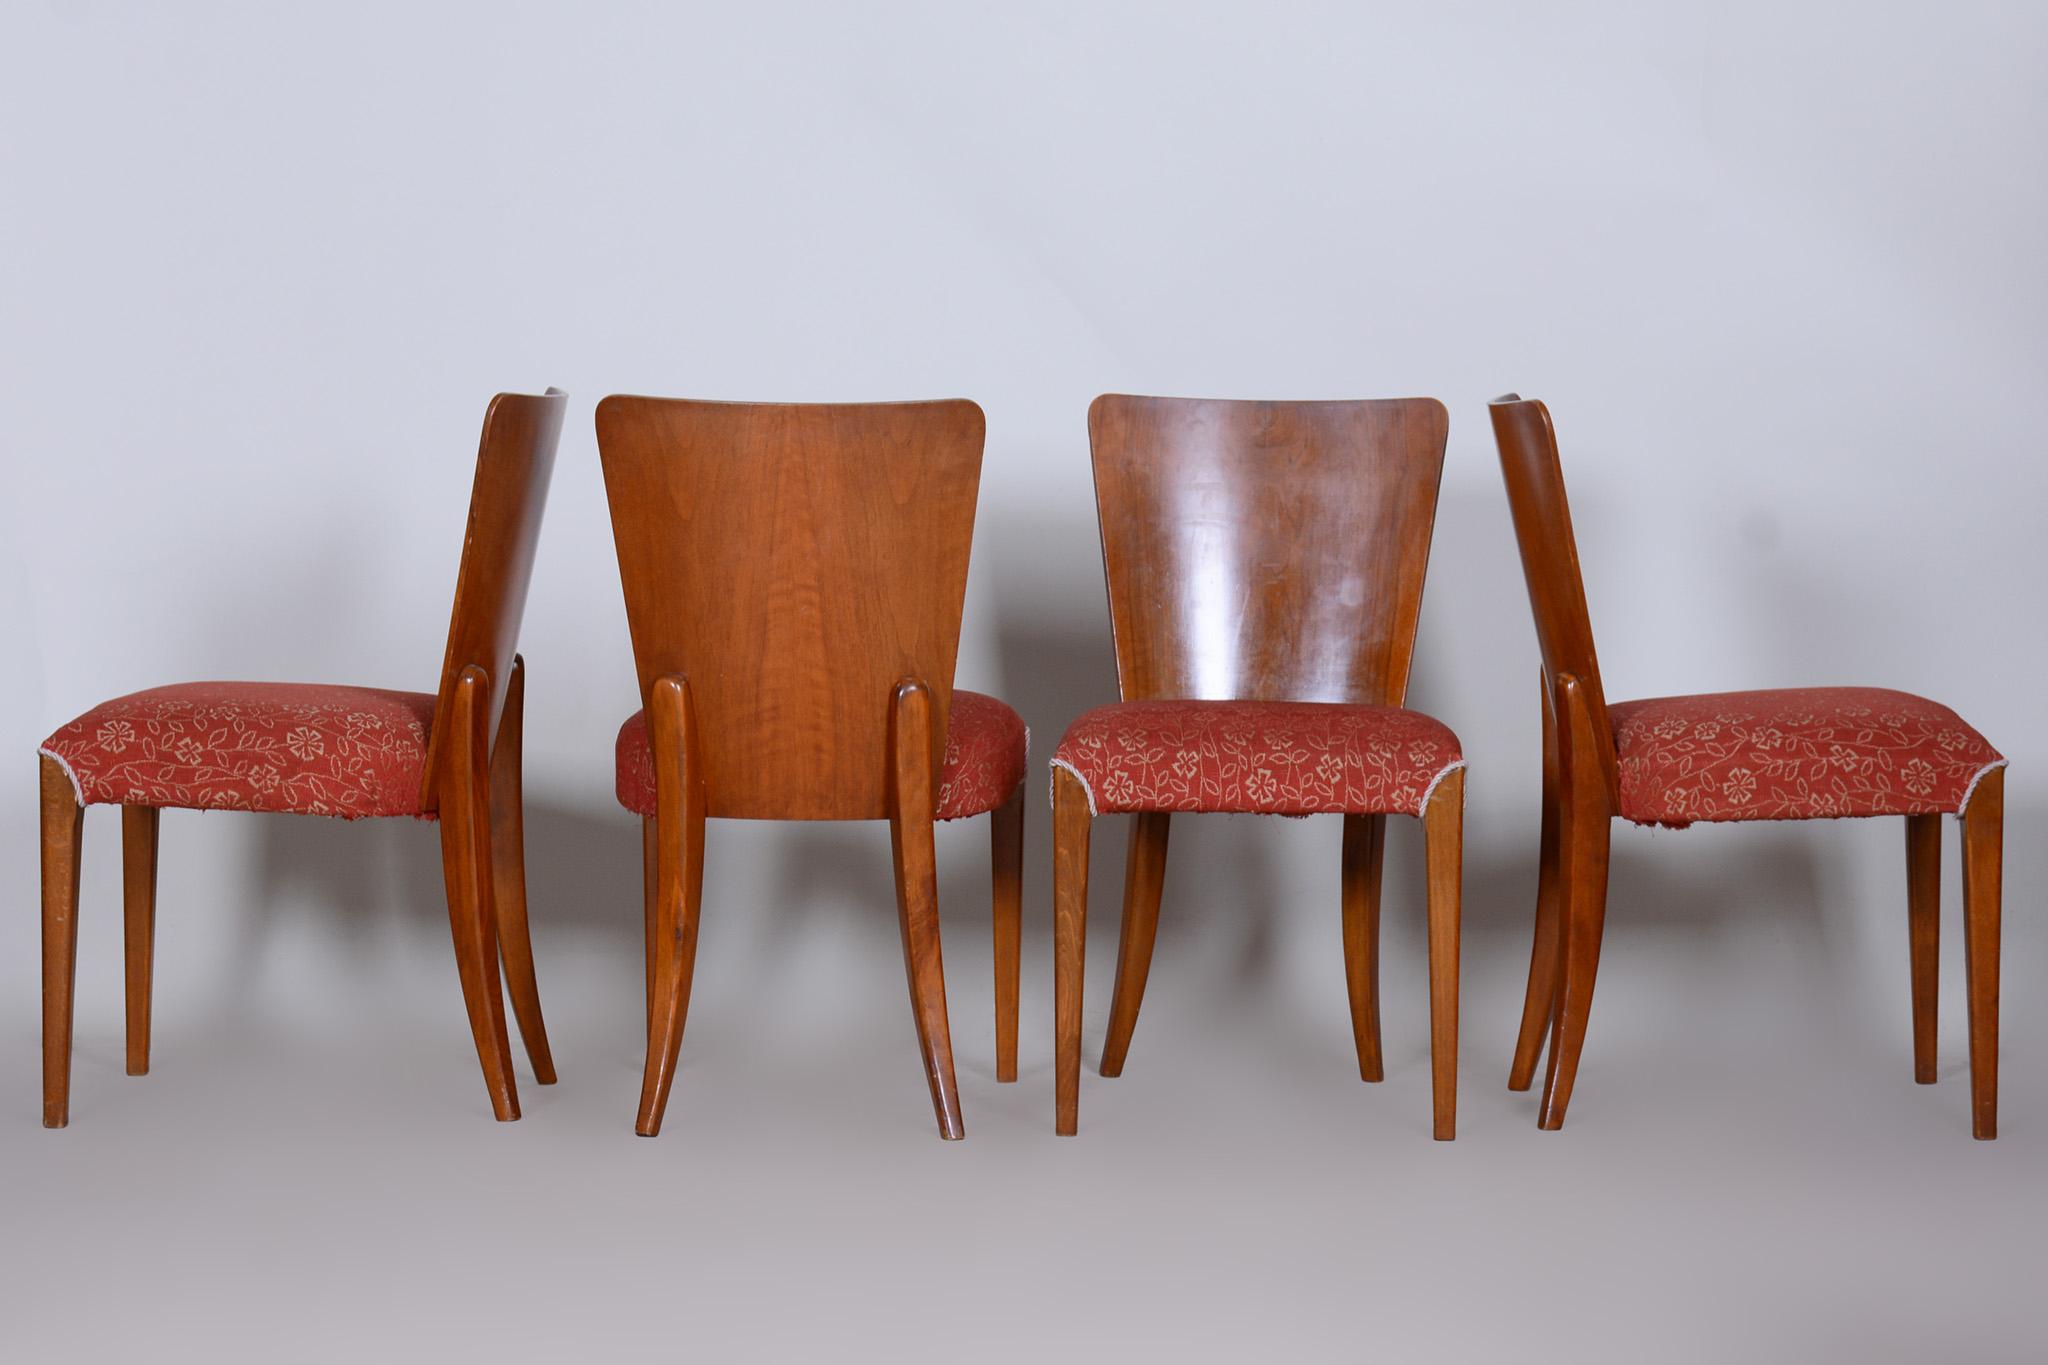 20th Century Czech Art Deco Chairs, 4 Pcs, Designed by Jindrich Halabala, UP Zavody, 1940s For Sale